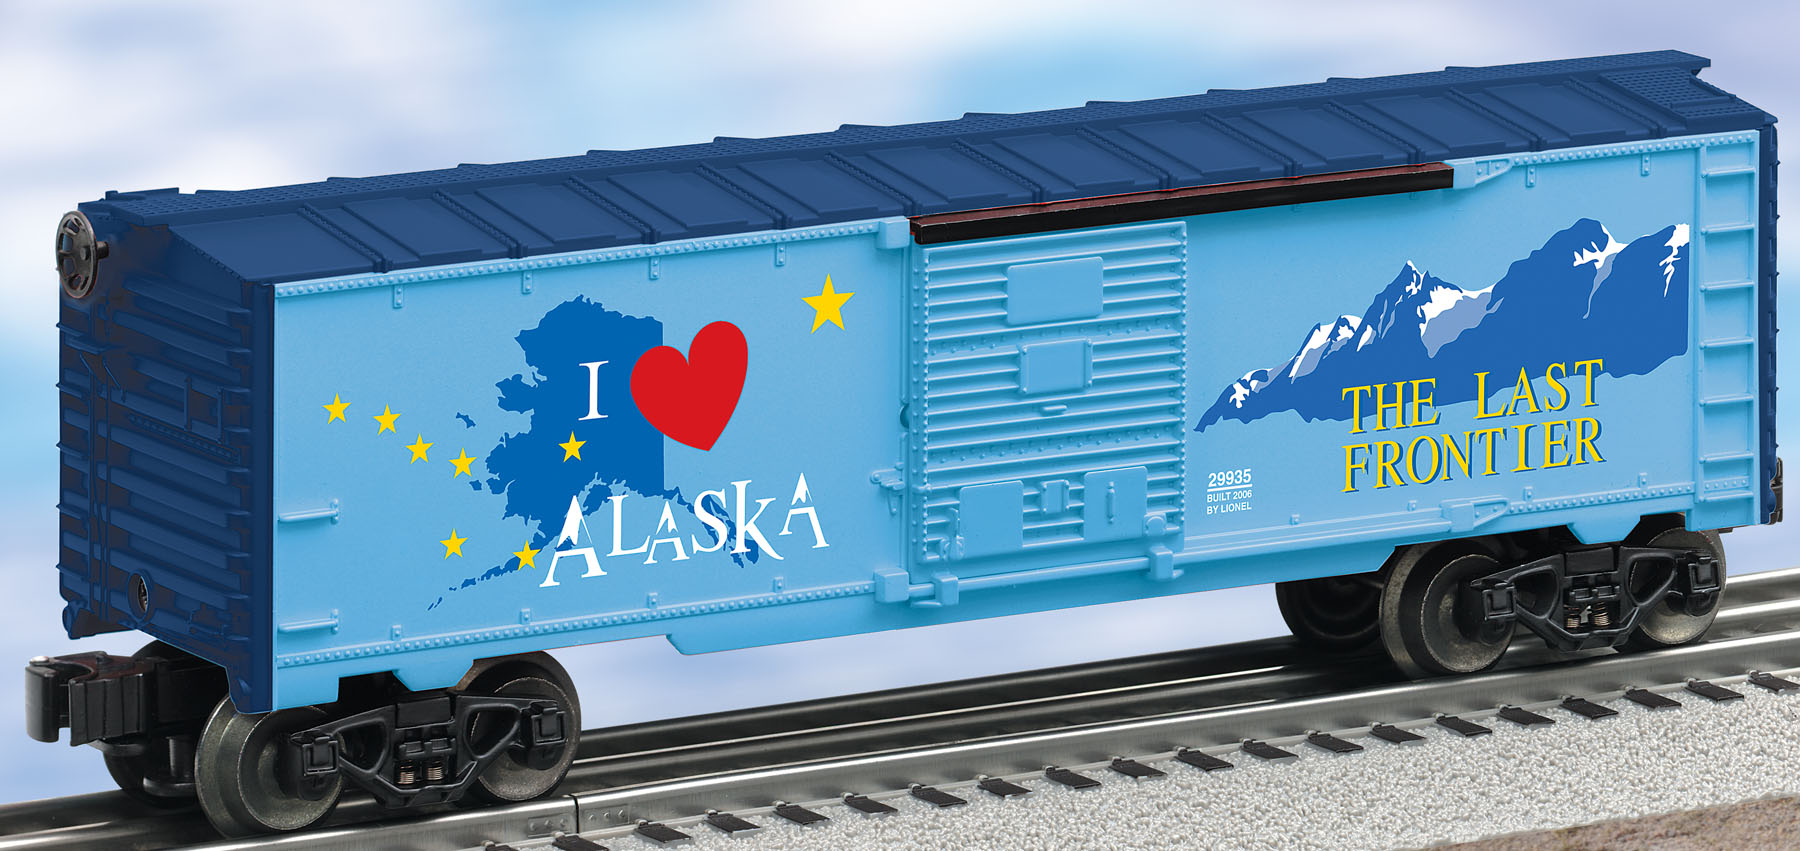 I Love Alaska Boxcar image